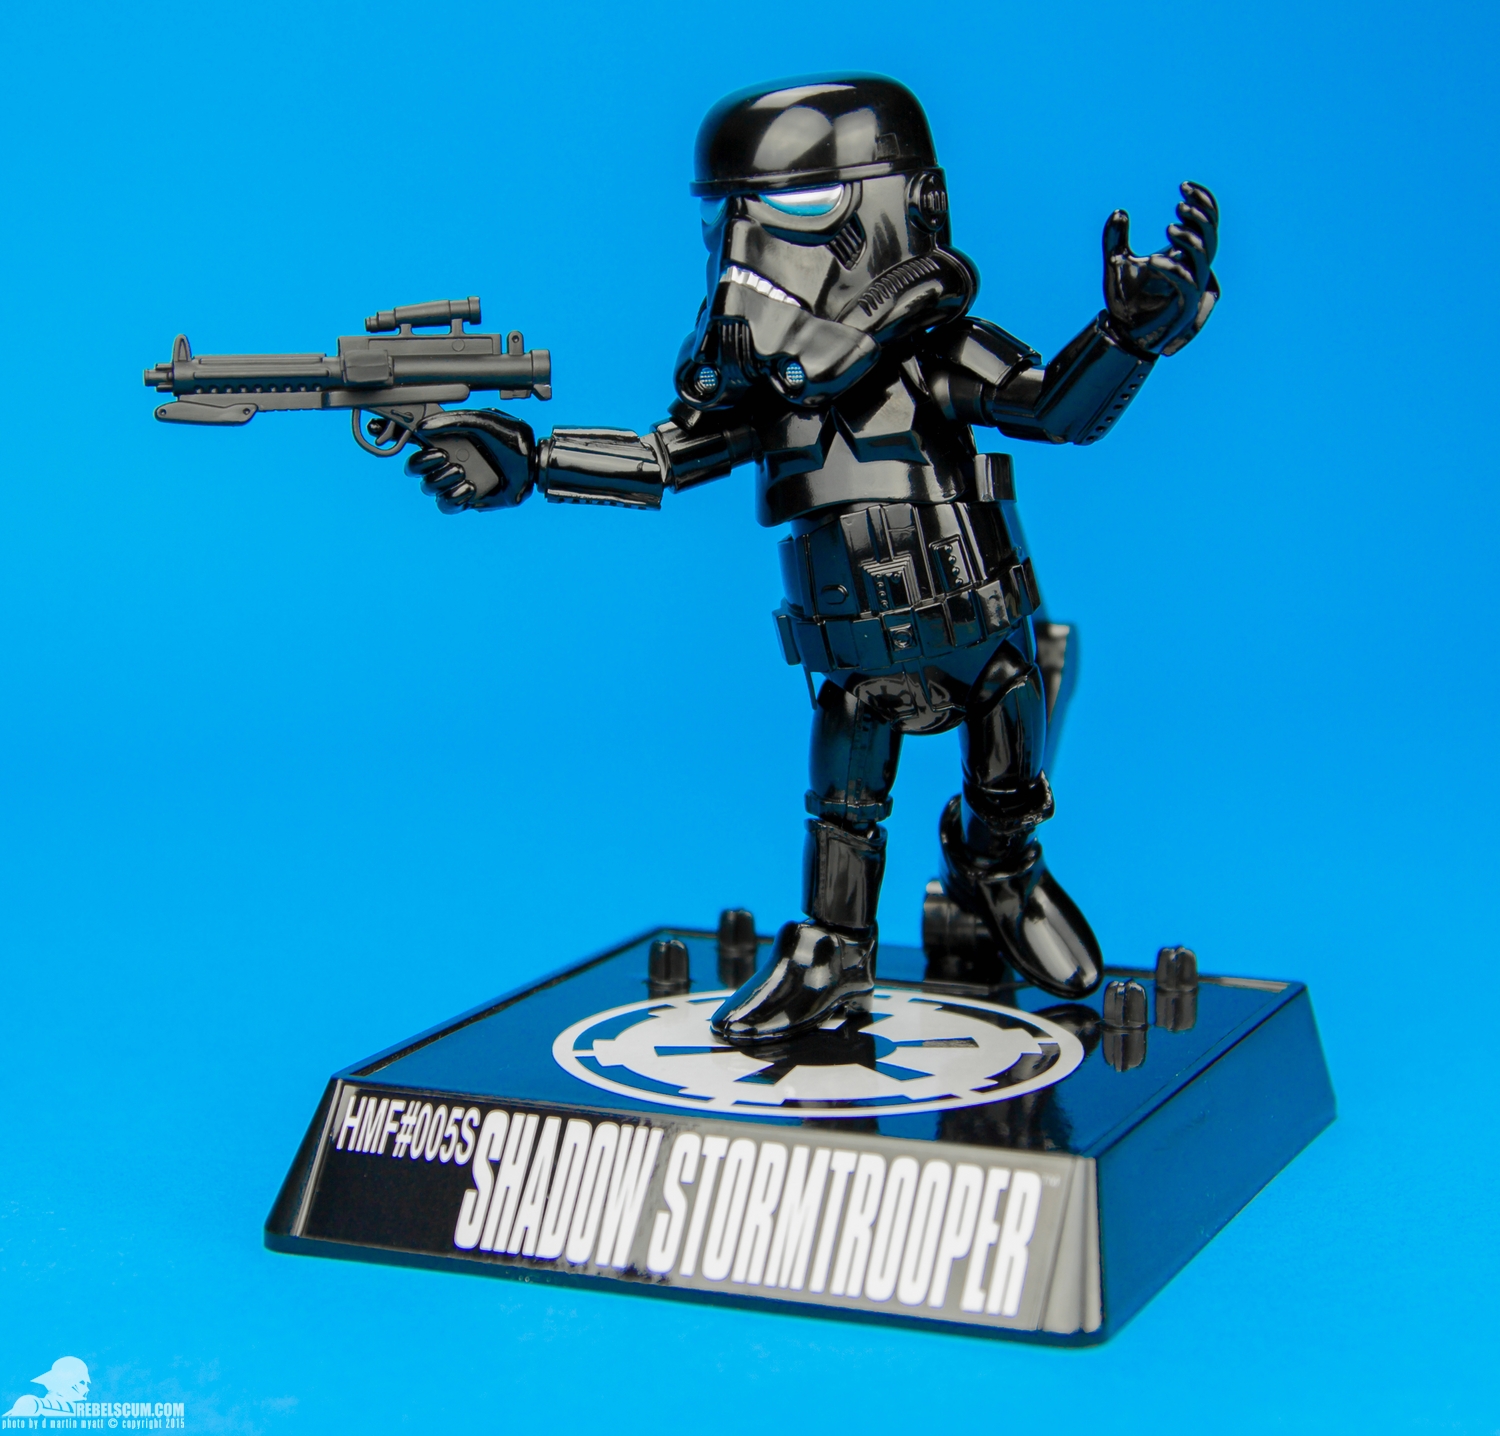 HMF005S-Shadow-Stormtrooper-Herocross-Hybrid-Metal-Figuration-010.jpg